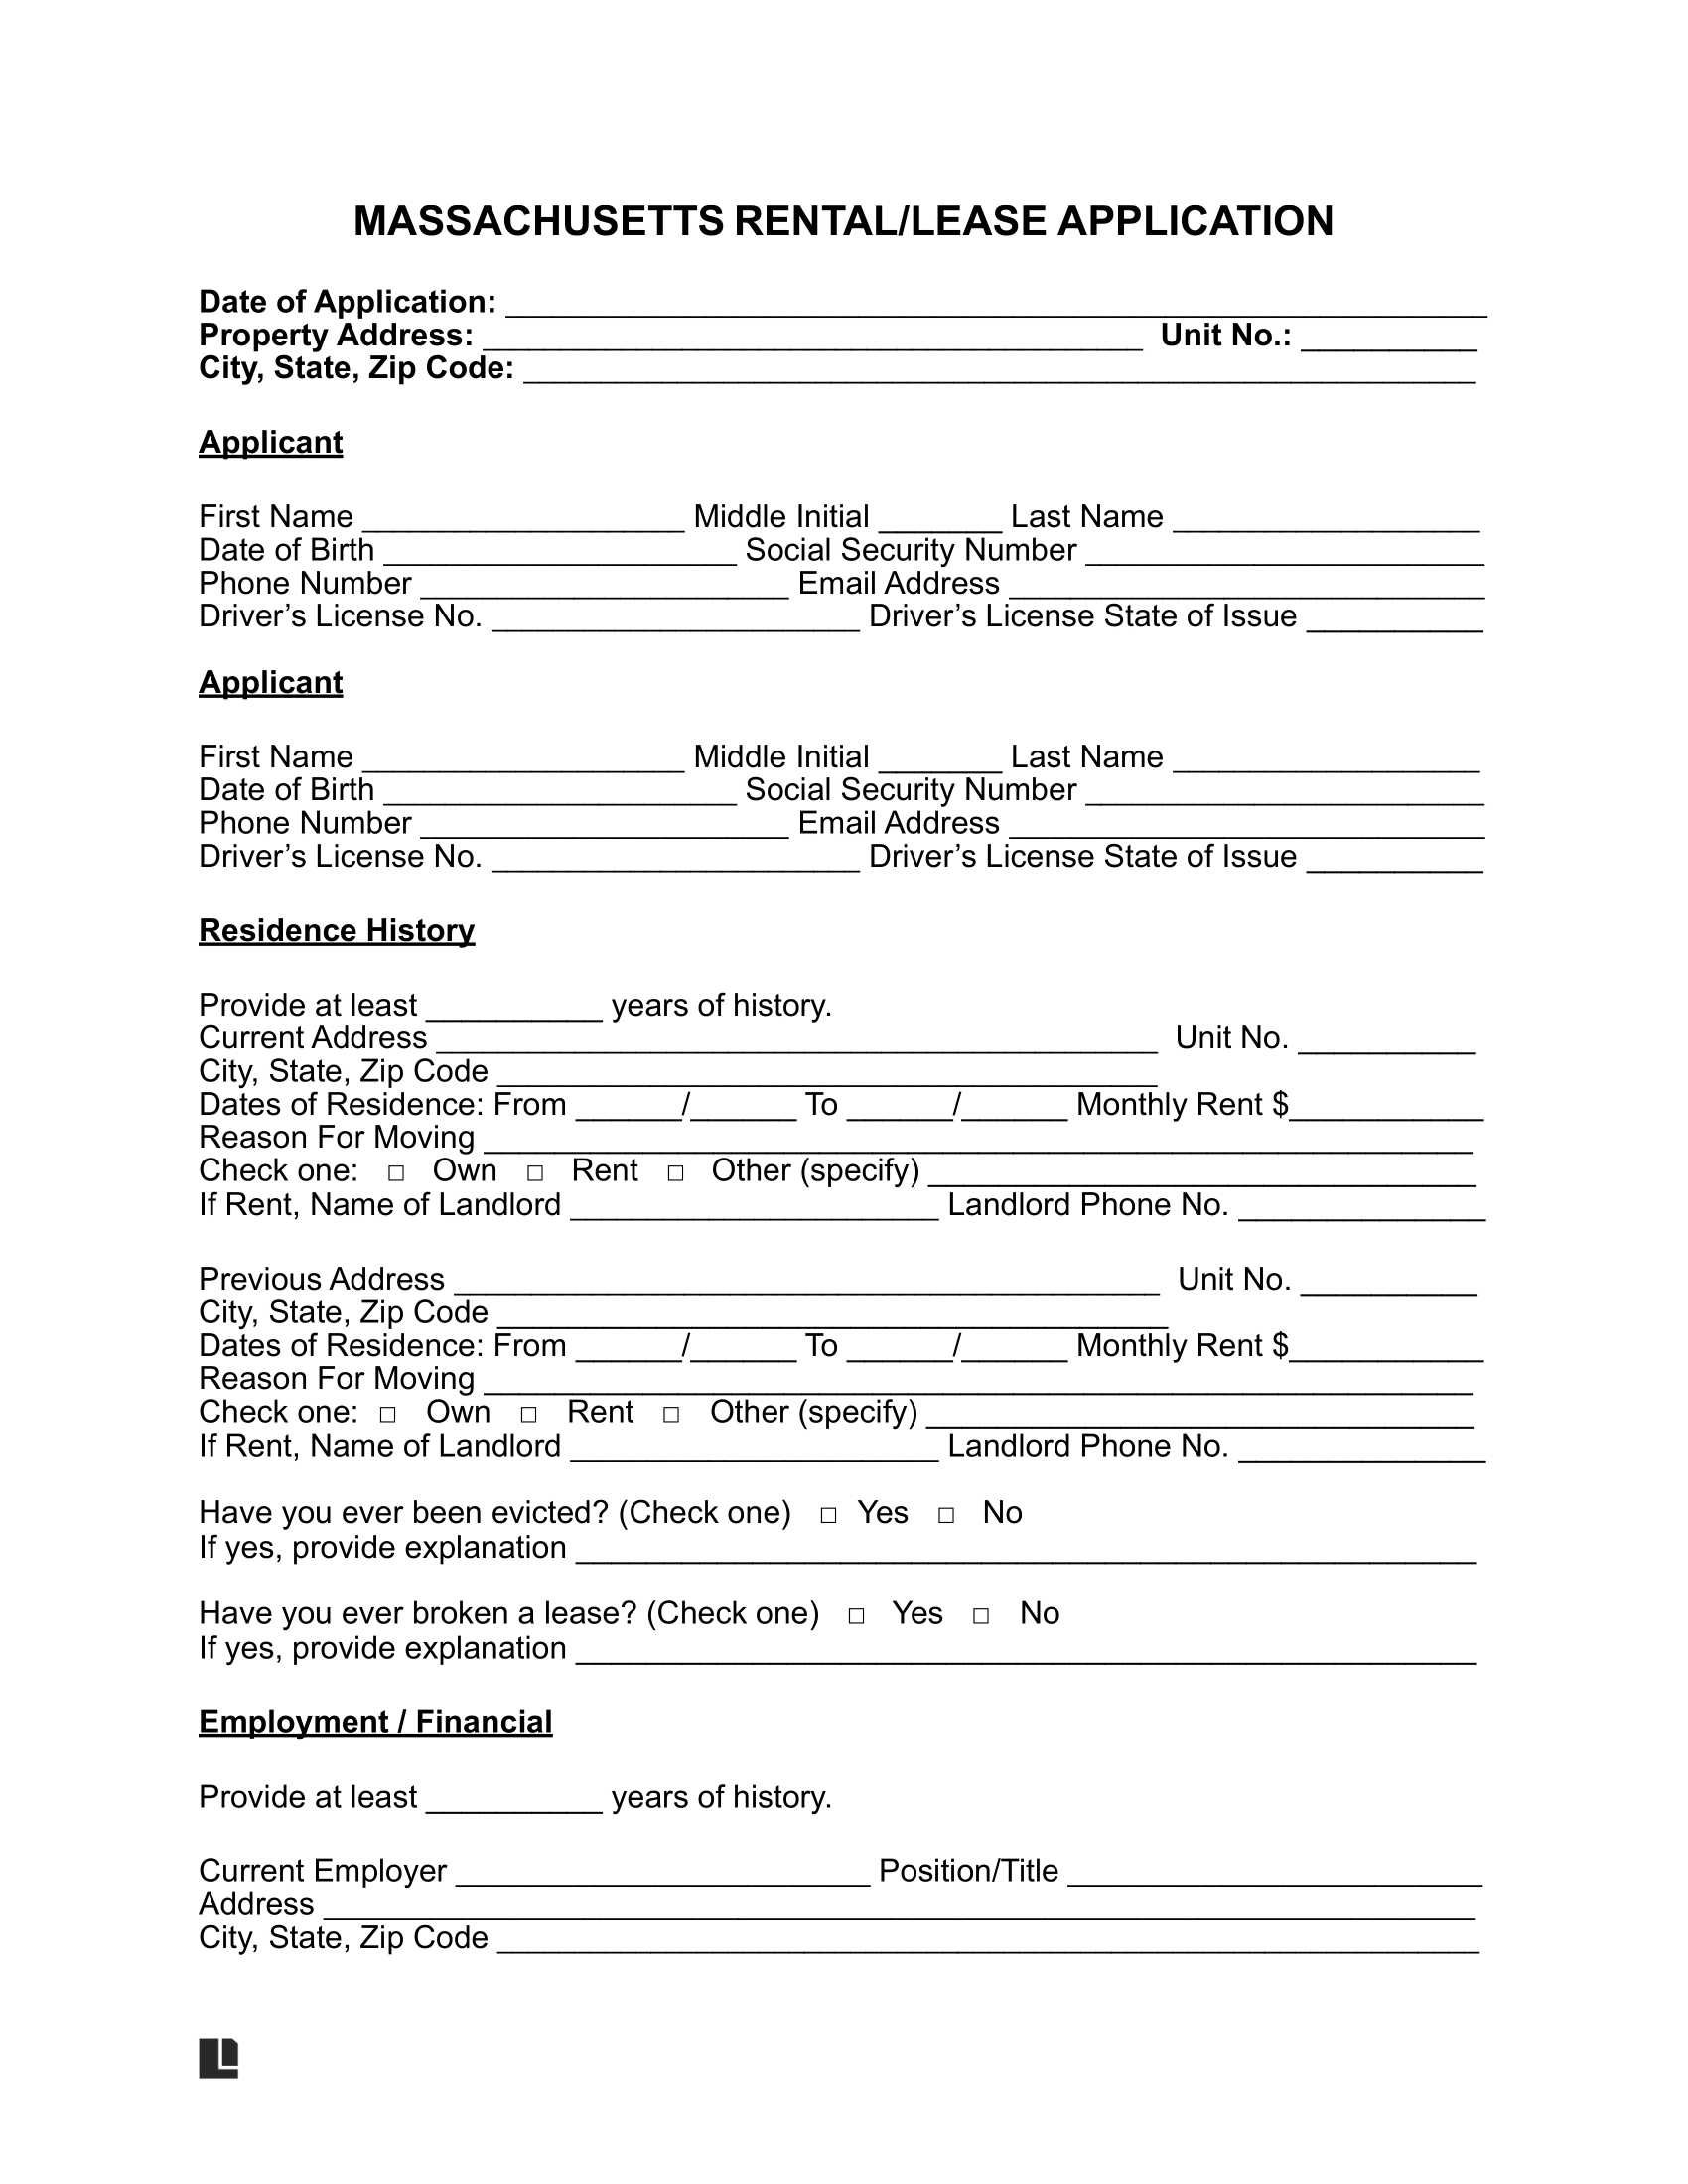 massachusetts rental application form